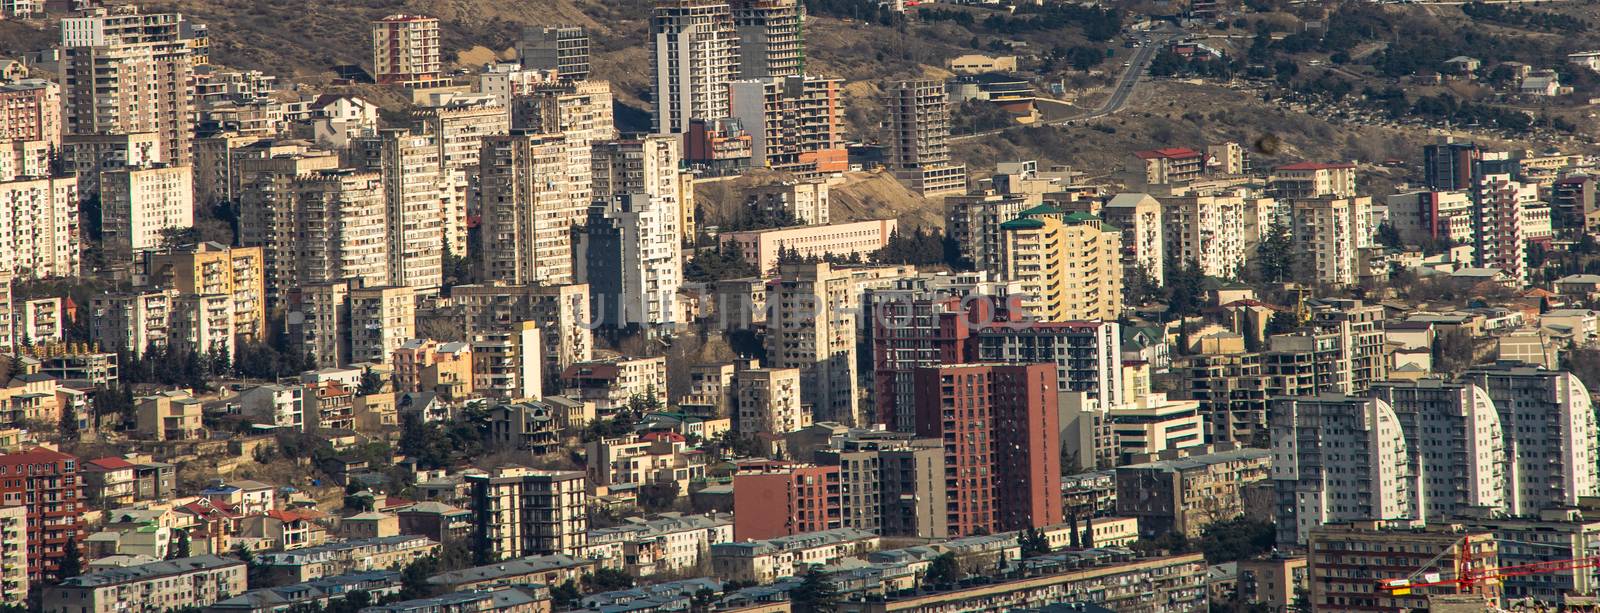 Vake Saburtalo area in Tbilisi by Elet